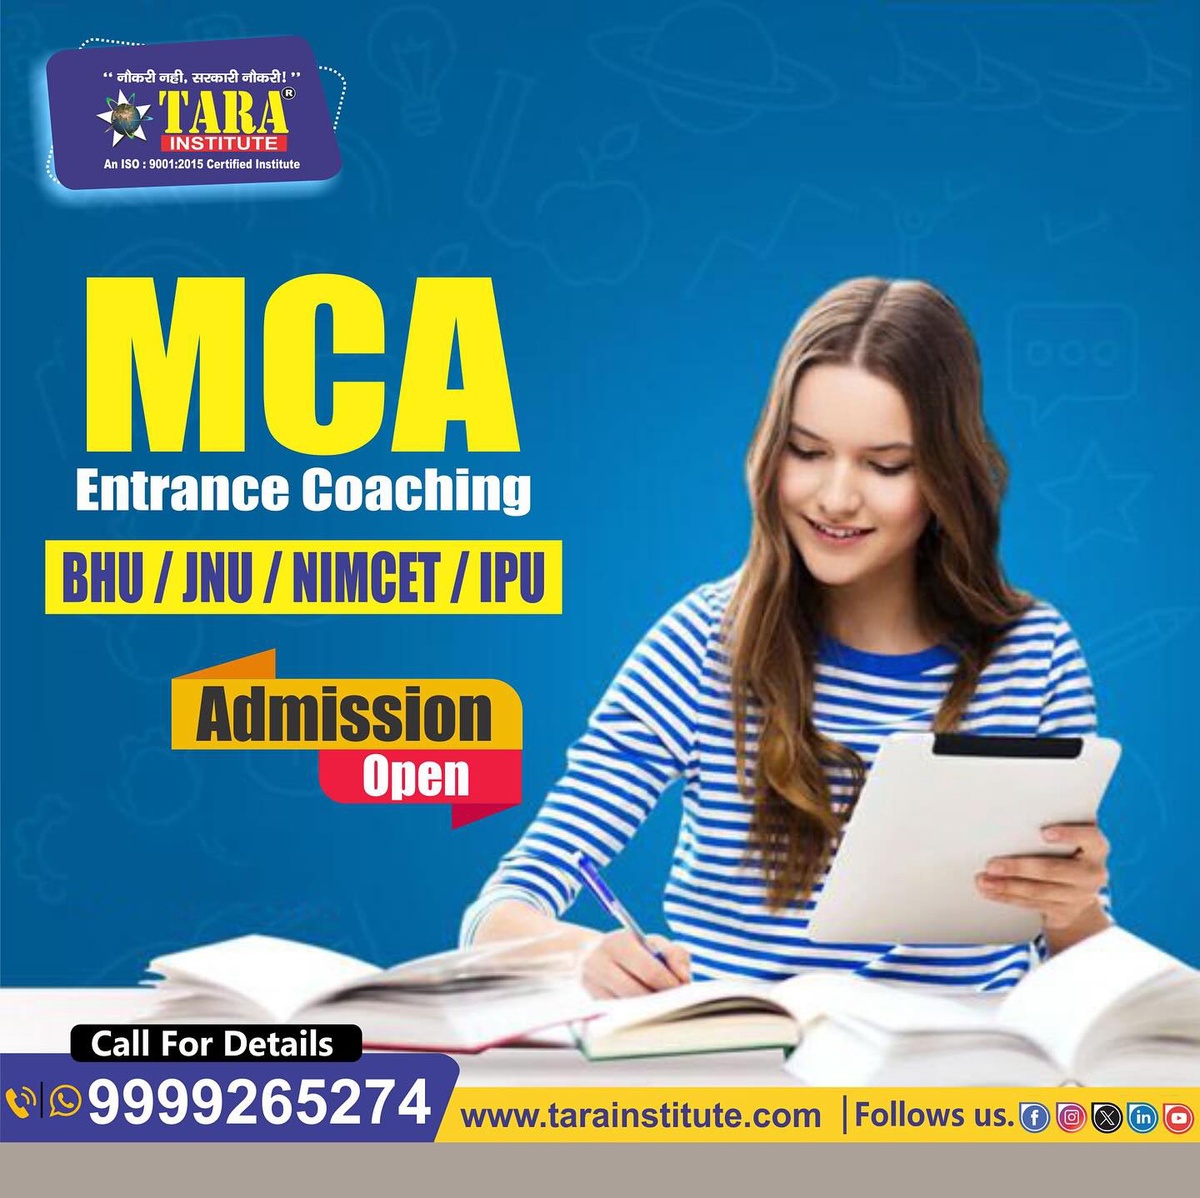 Choosing the Right MCA Entrance Coaching Institute in Kolkata